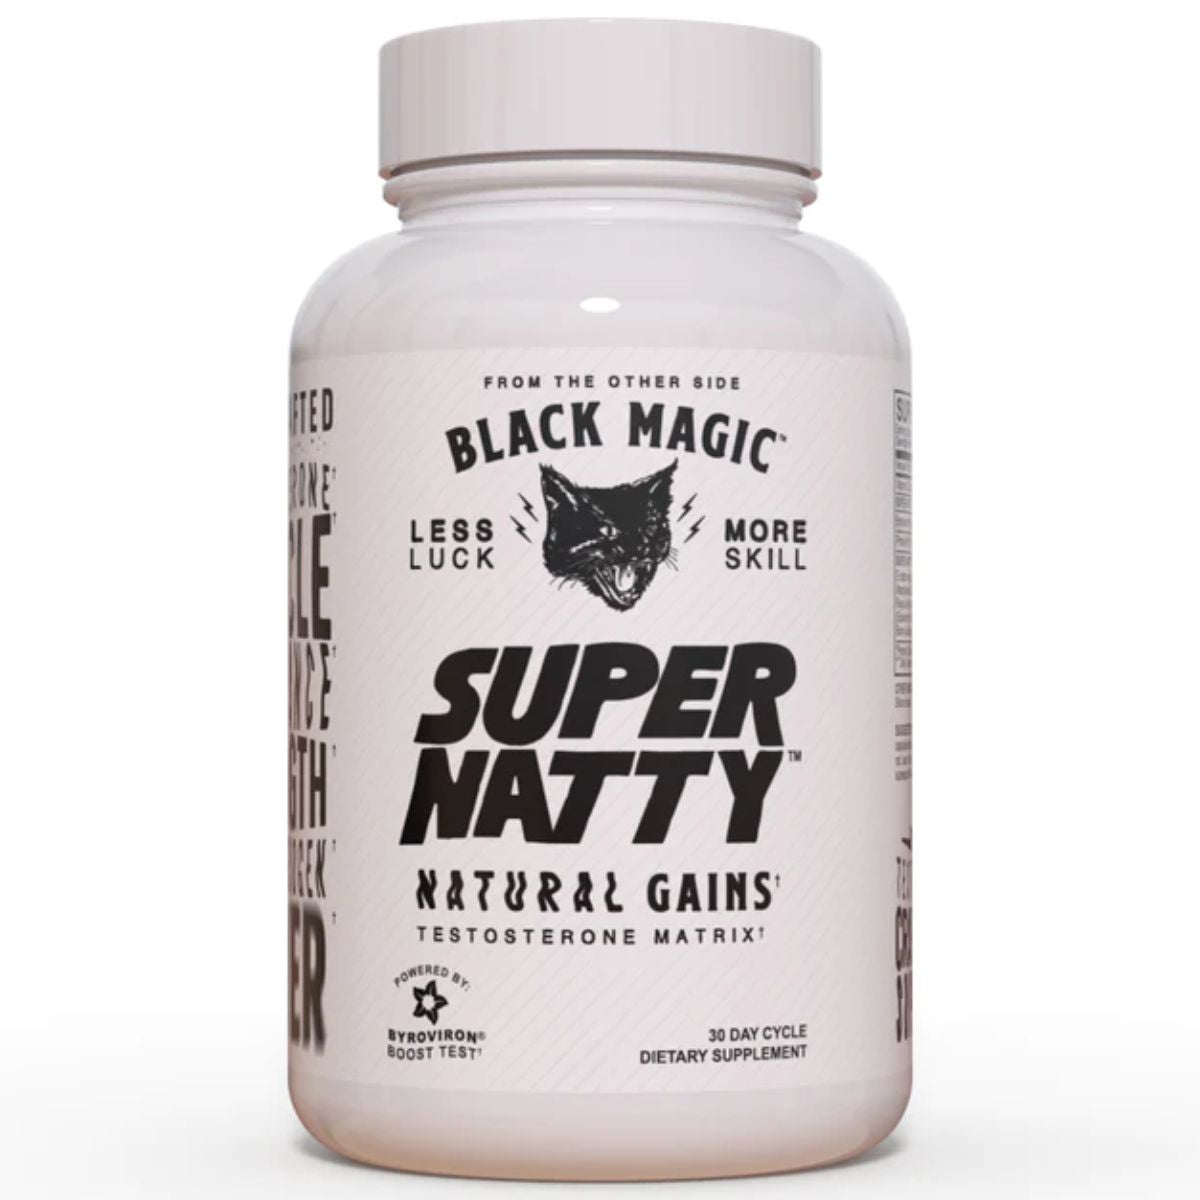 Black Magic Super Natty Testosterone Matrix